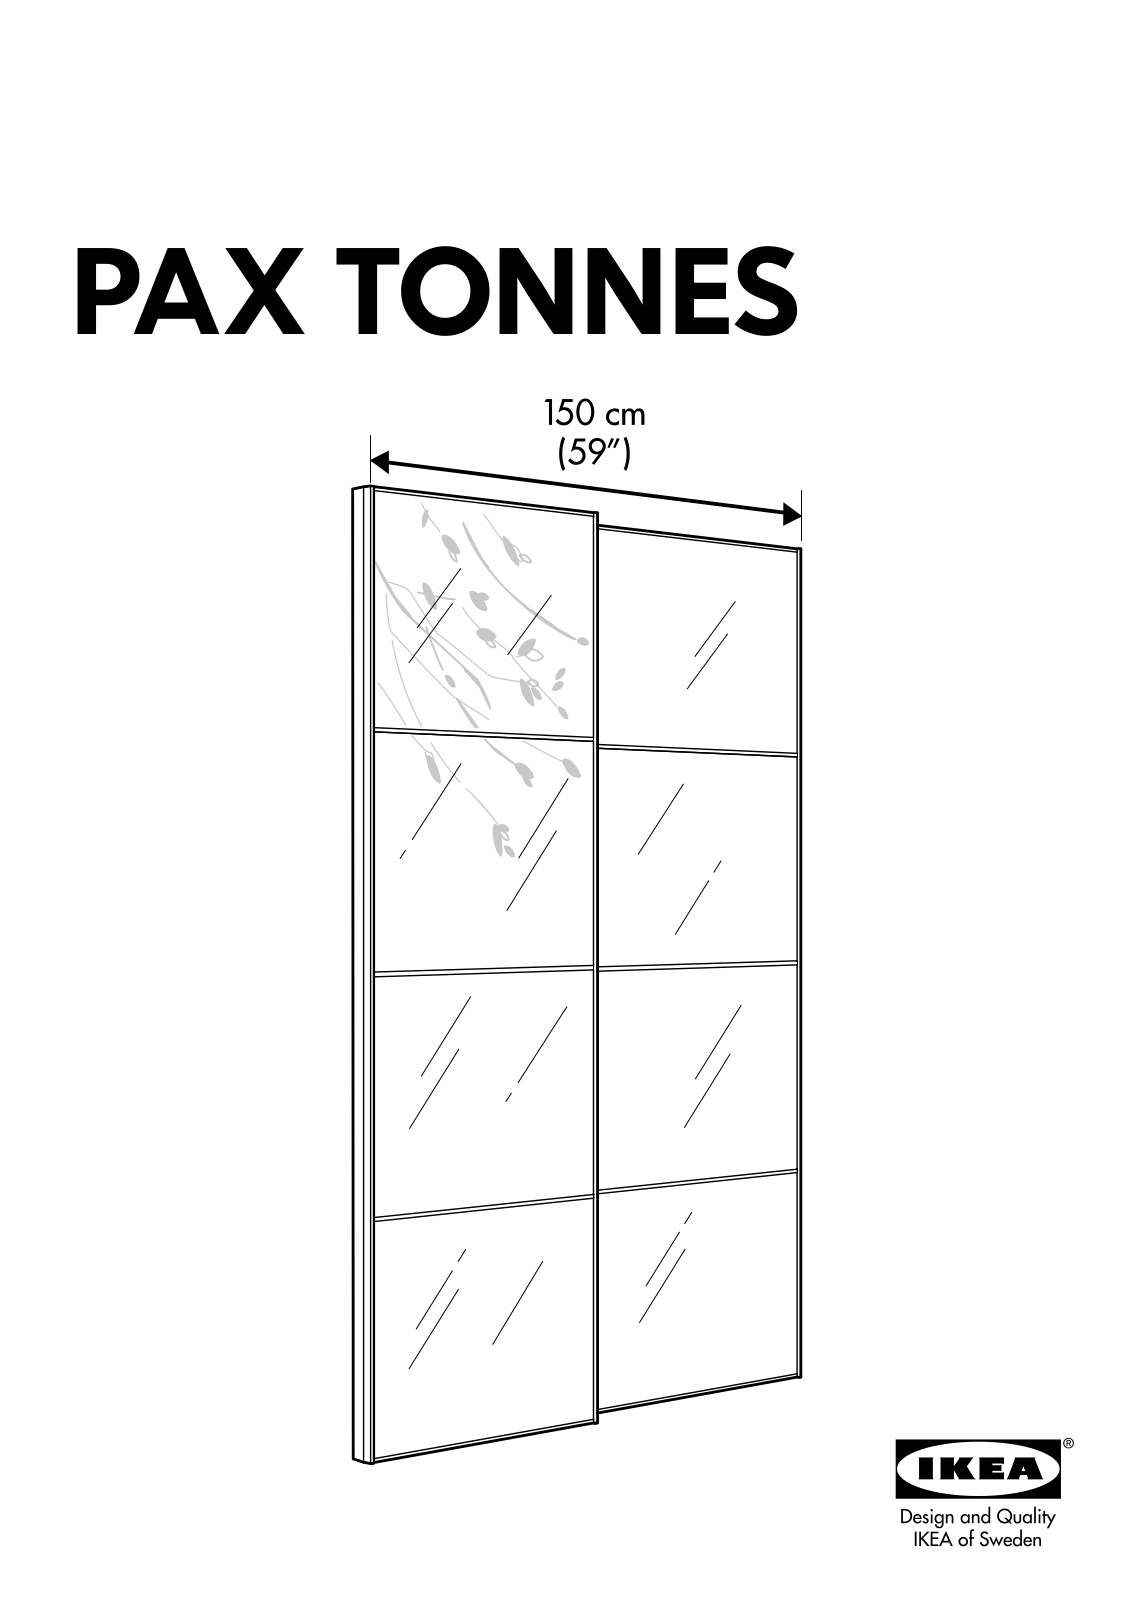 IKEA PAX TONNES SLIDING DOORS 59X93 Assembly Instruction